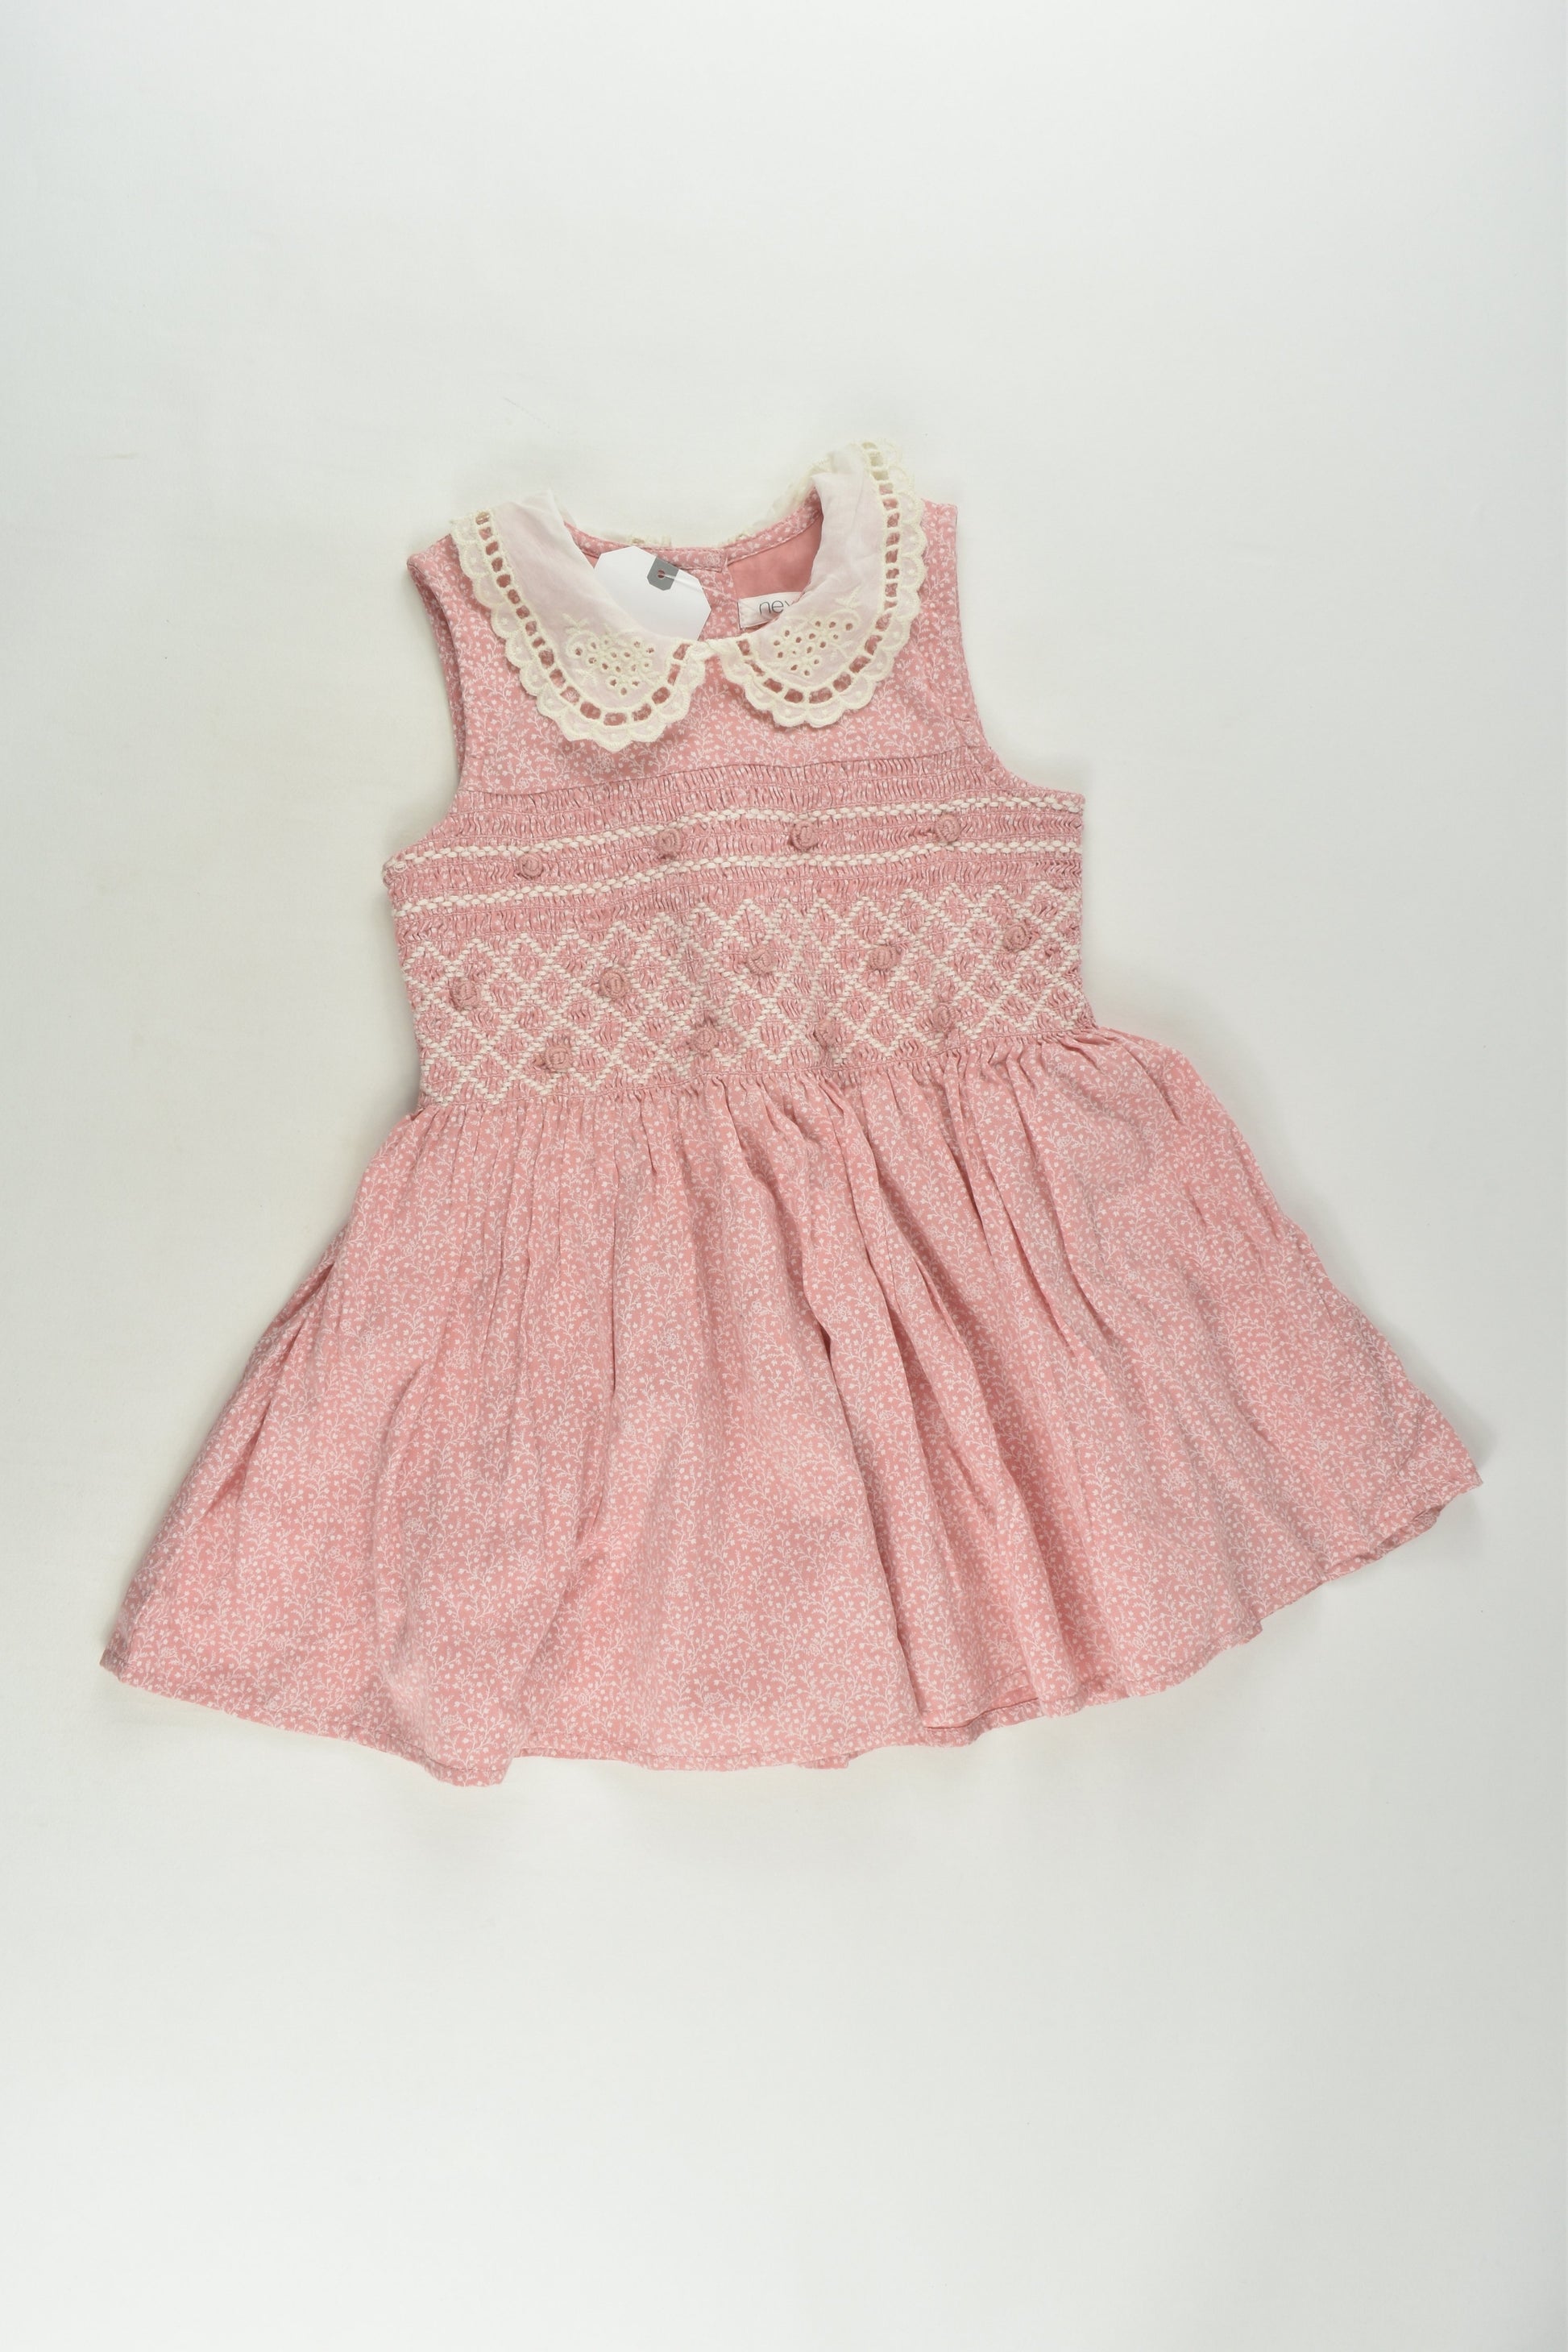 NEW Next Size 1 (86 cm) Lined Smocked Dress